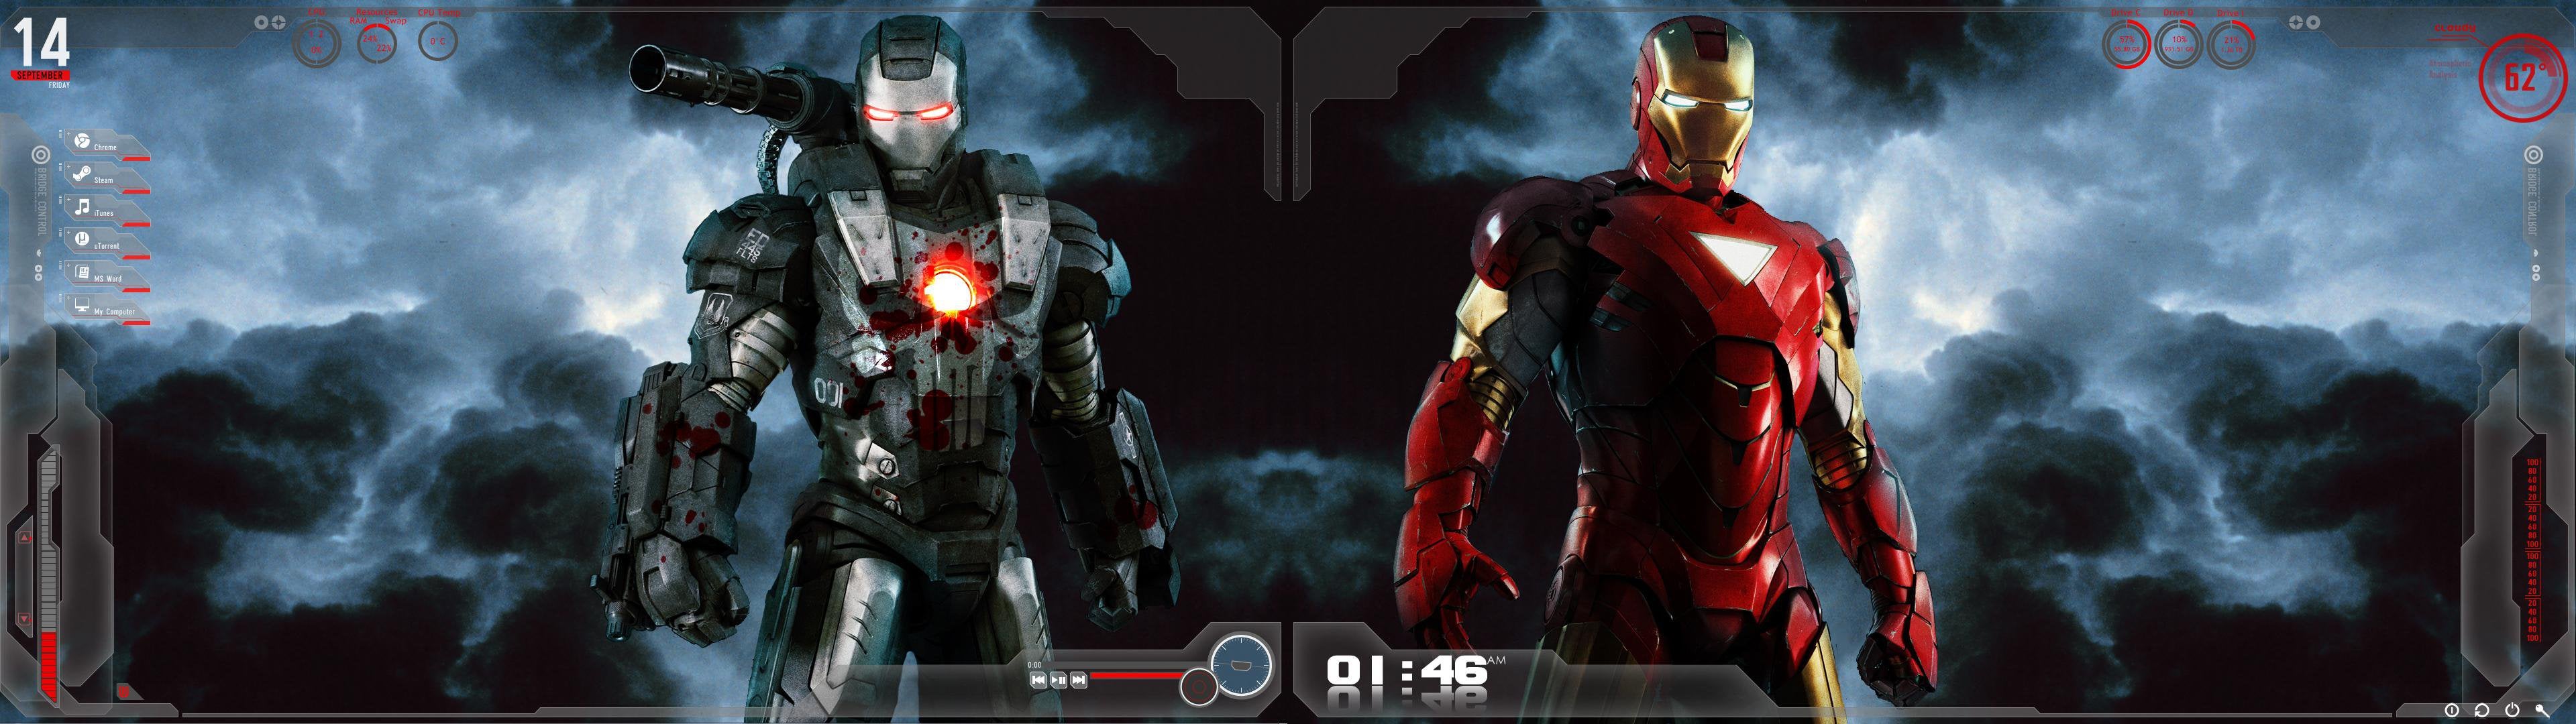 Iron Man Dual Monitor Wallpapers